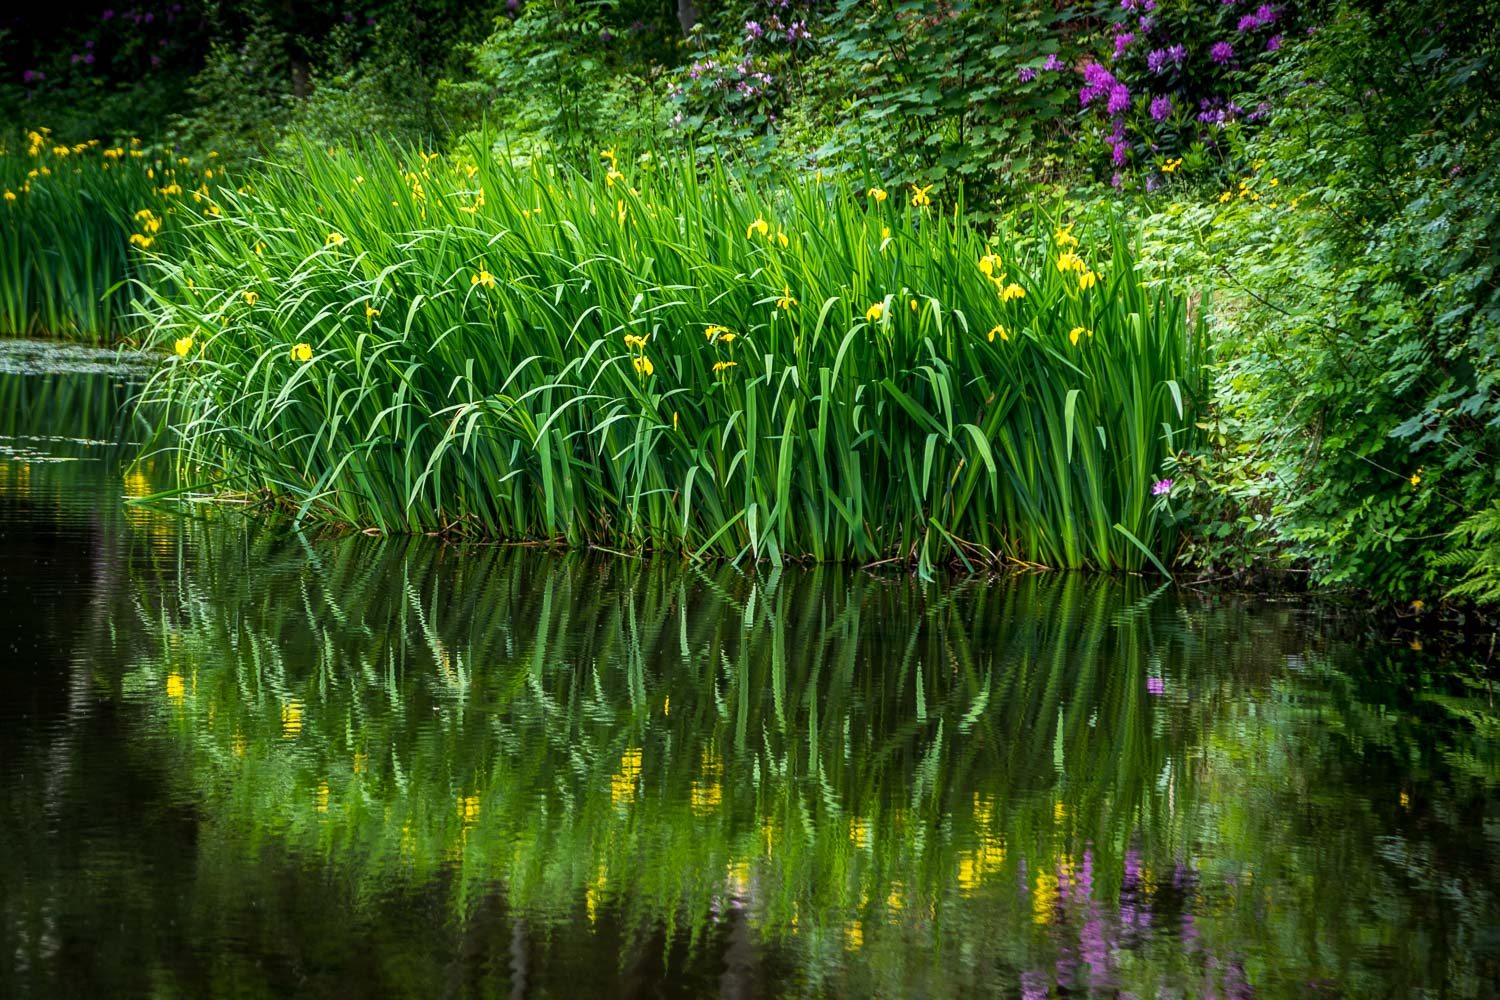 Lowther Castle gardens, Jack Croft's Pond